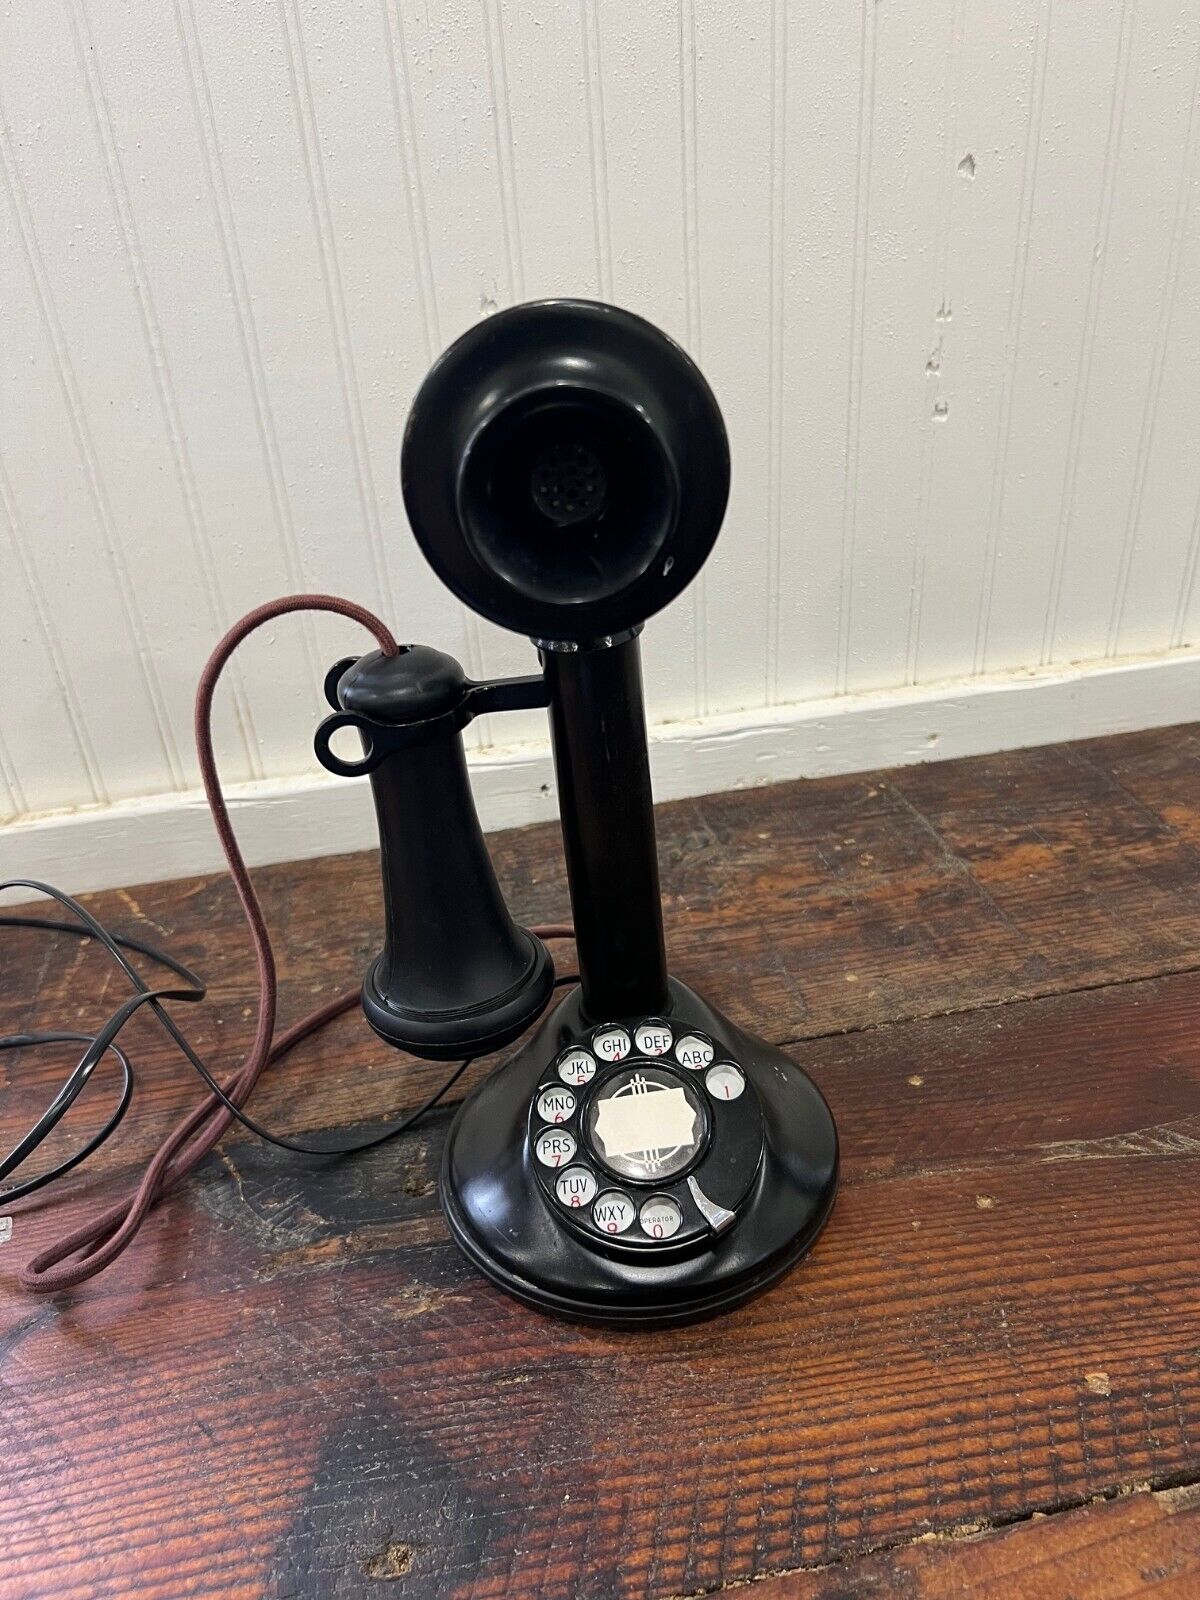 VINTAGE 1930'S CANDLESTICK TELEPHONE ORIGINAL REFURBISHED TO WORK ON LANDLINES